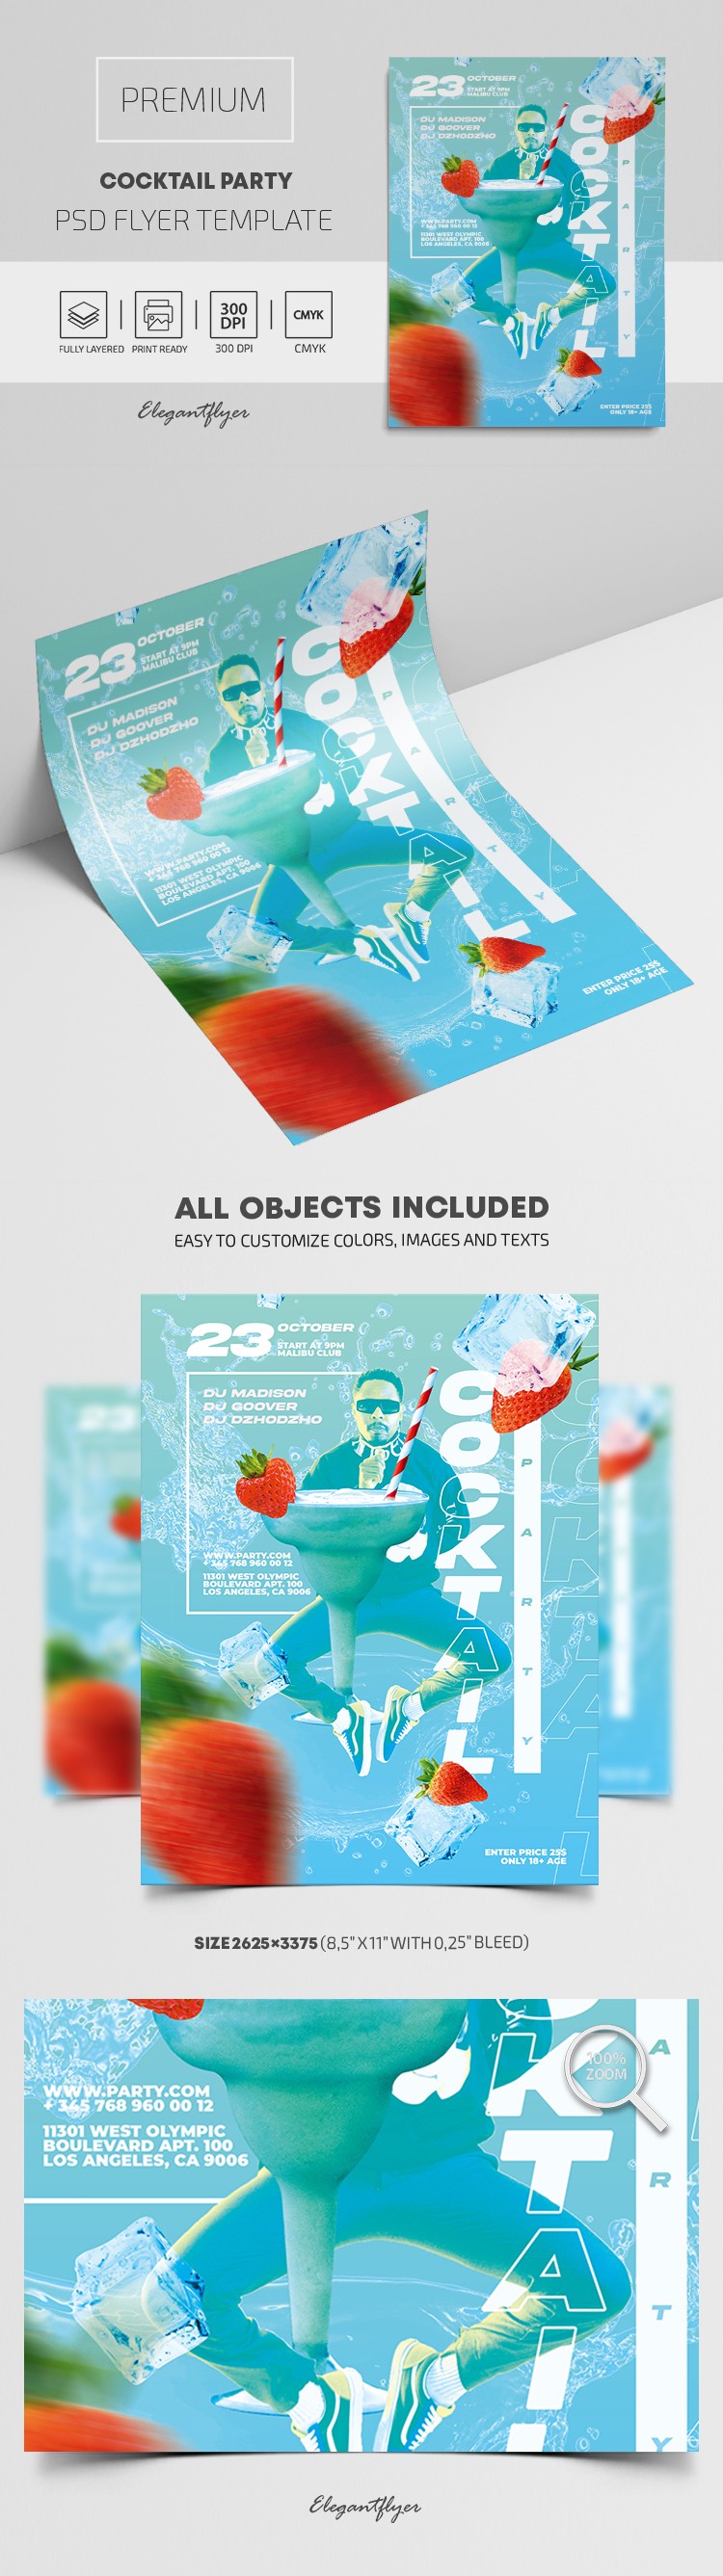 Brochure de soirée cocktail by ElegantFlyer